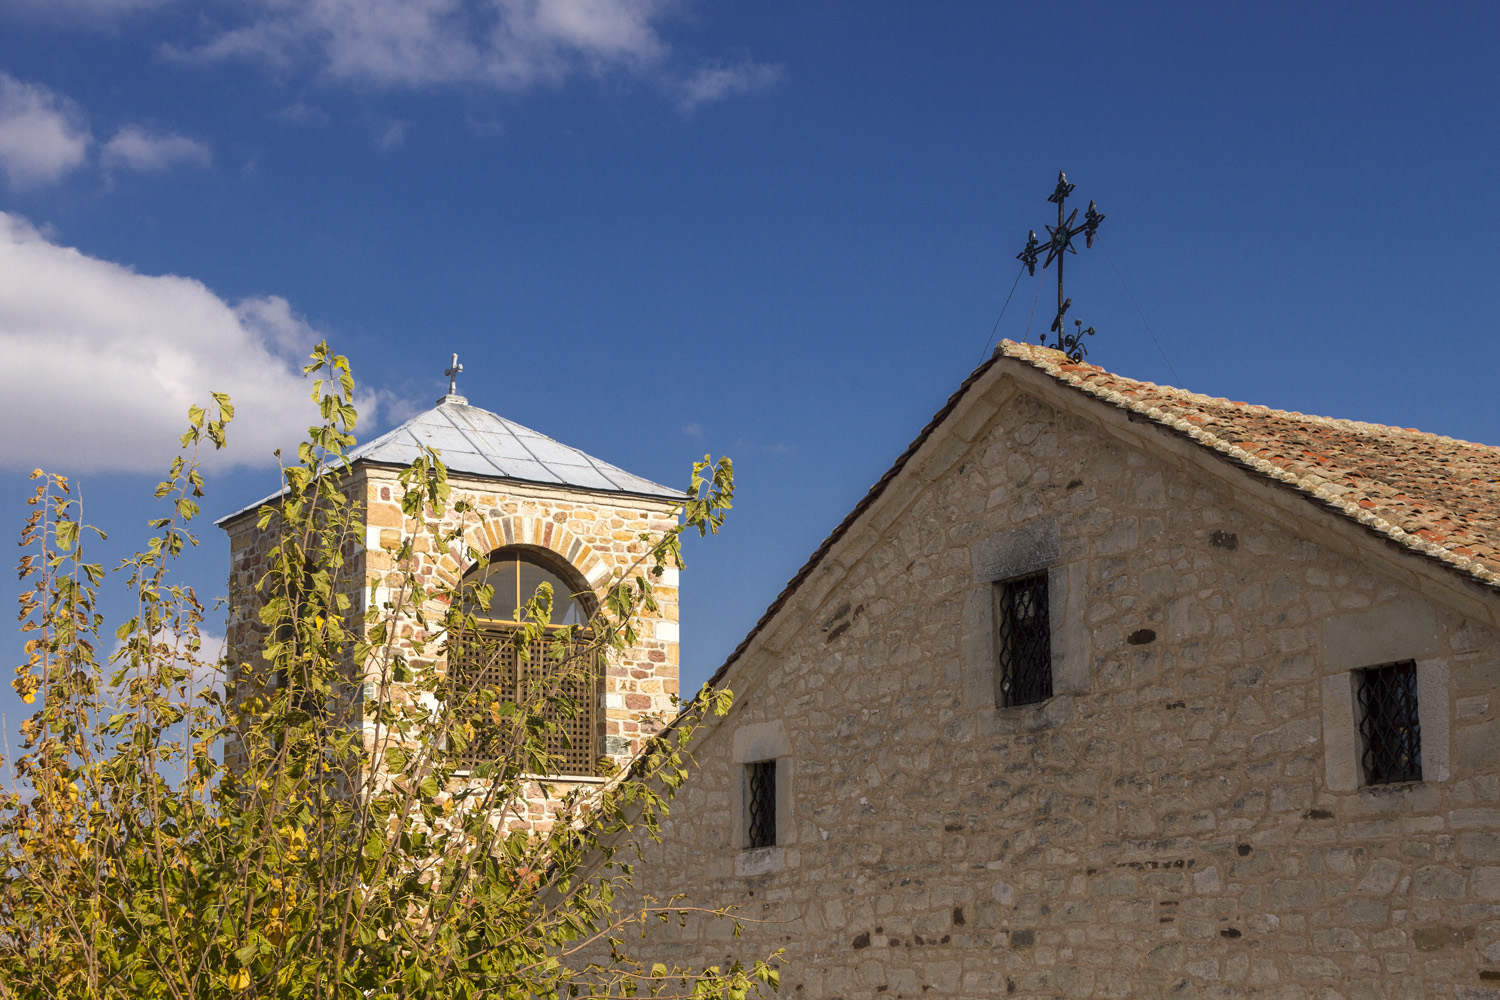 Partial view of the Greek Orthodox monastery of Panagia Portaitissa, in Soufli, Evros region, Thrace, Greece.